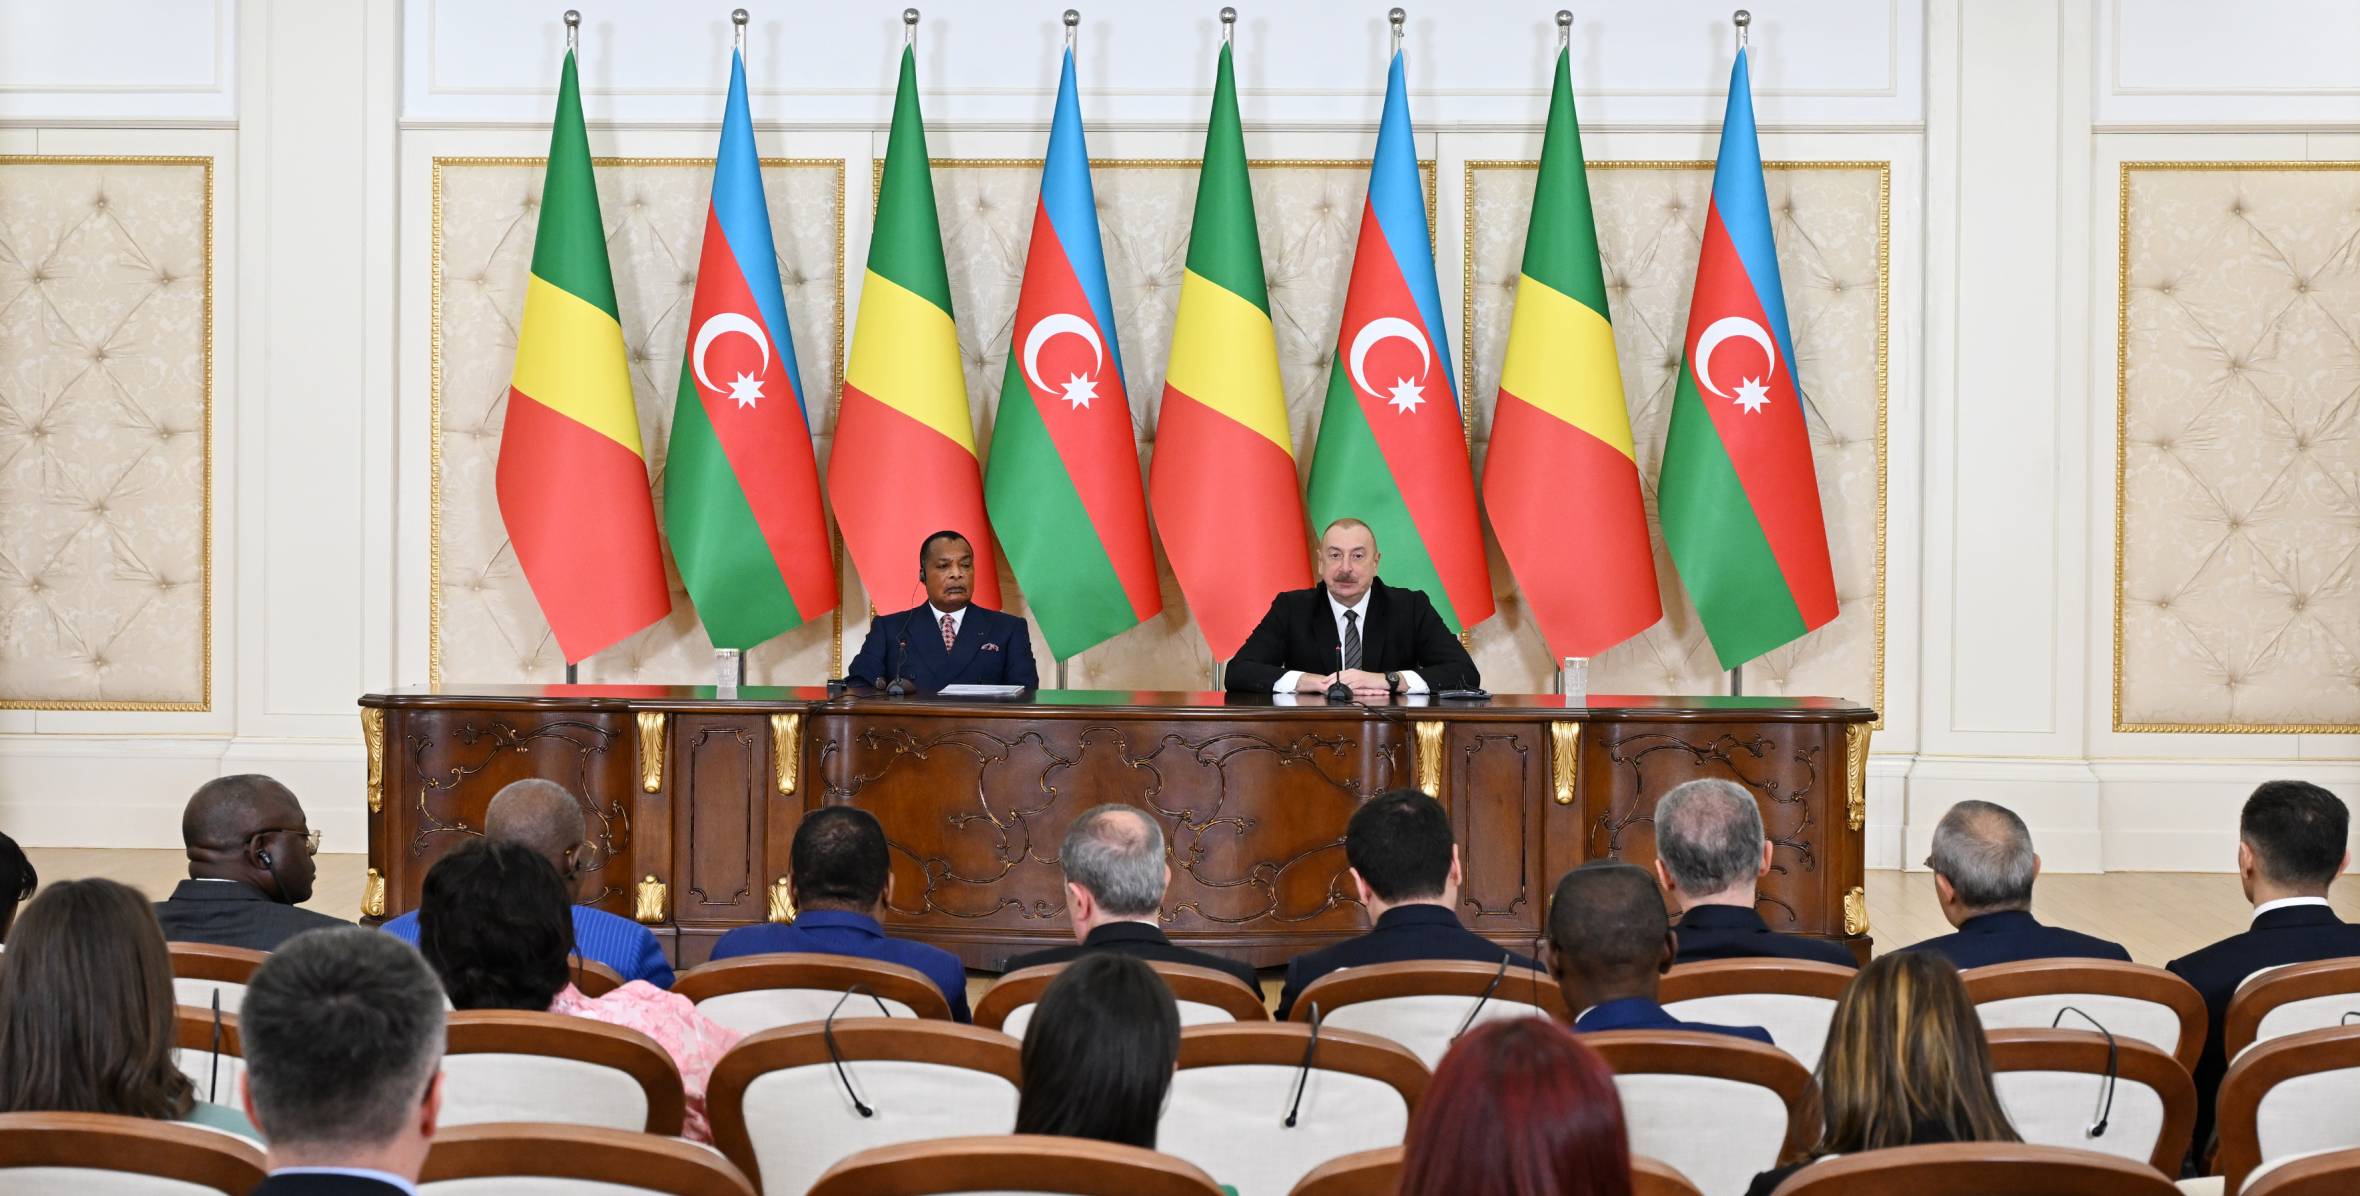 Azerbaijani and Congolese presidents made press statements